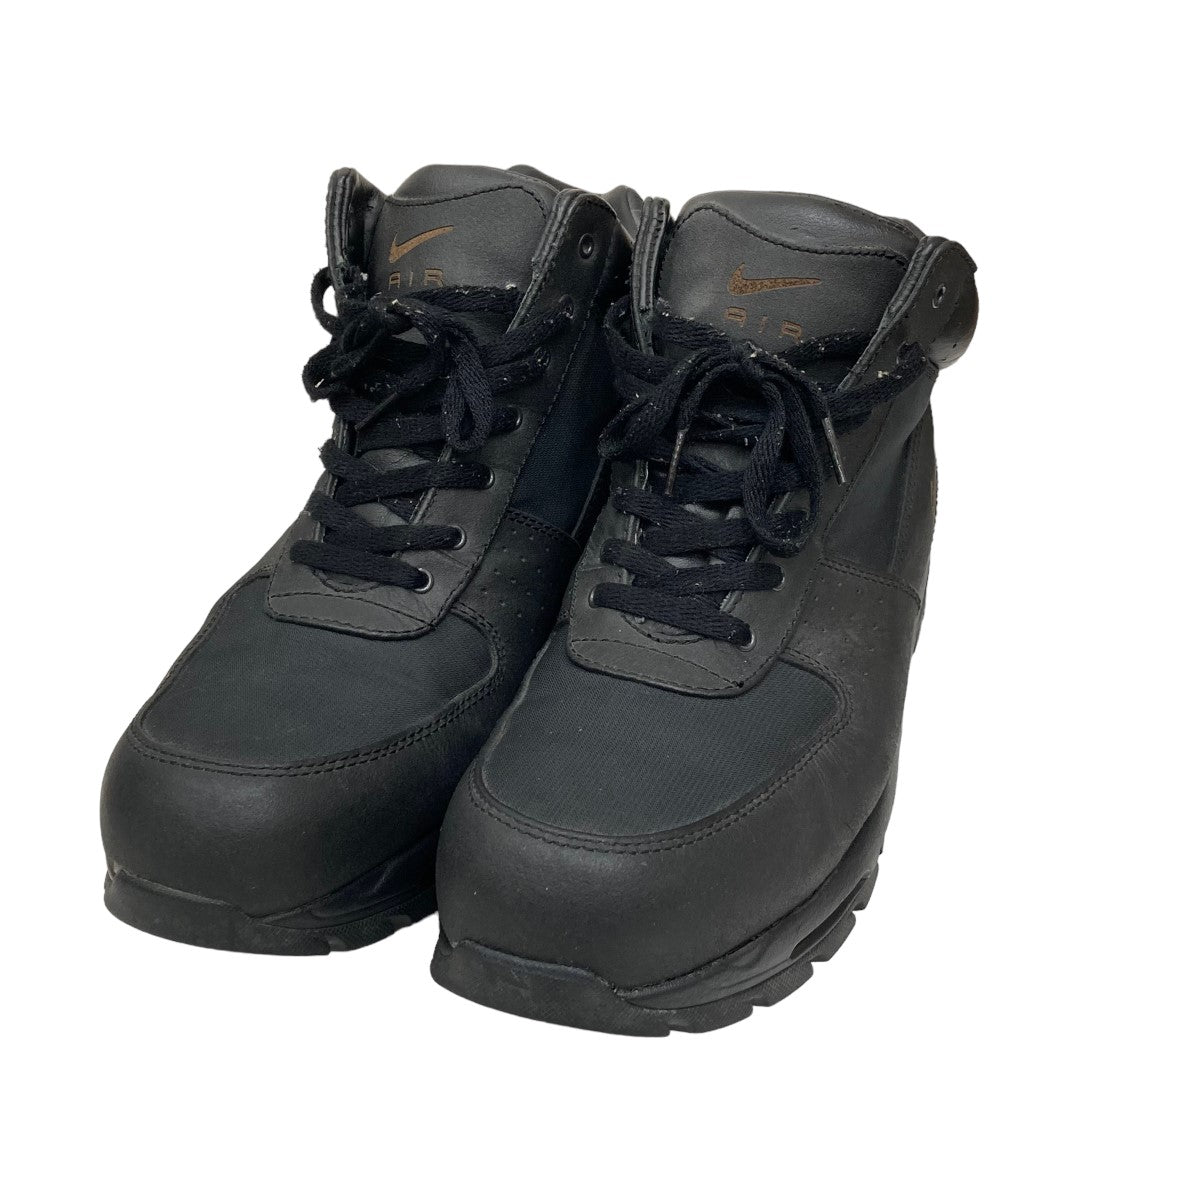 Nike ACG(ナイキエーシージー) Goadome Waterproof Boots ハイカット 